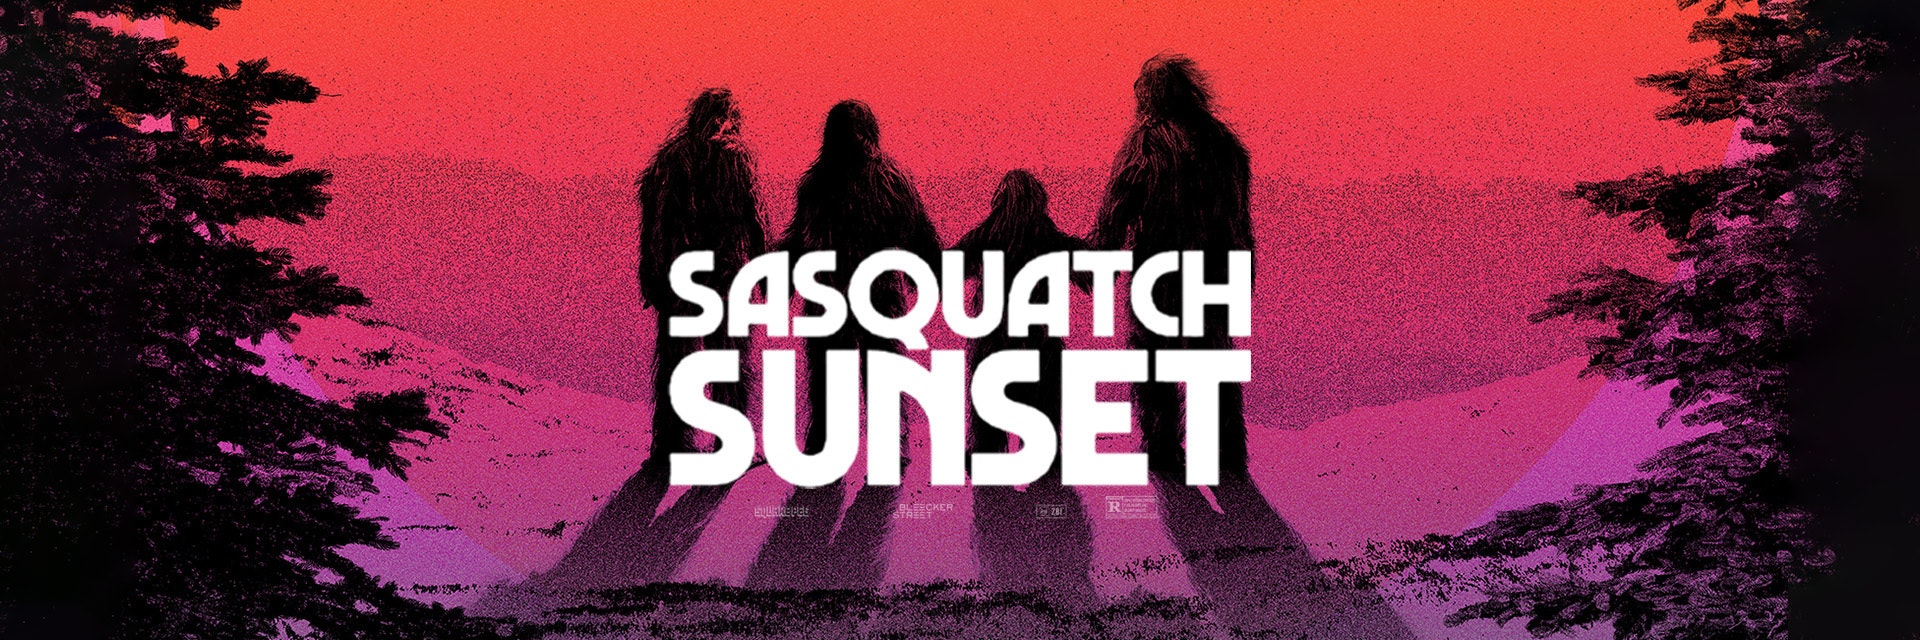 Sasquatch Sunset Web FSL 1920x640